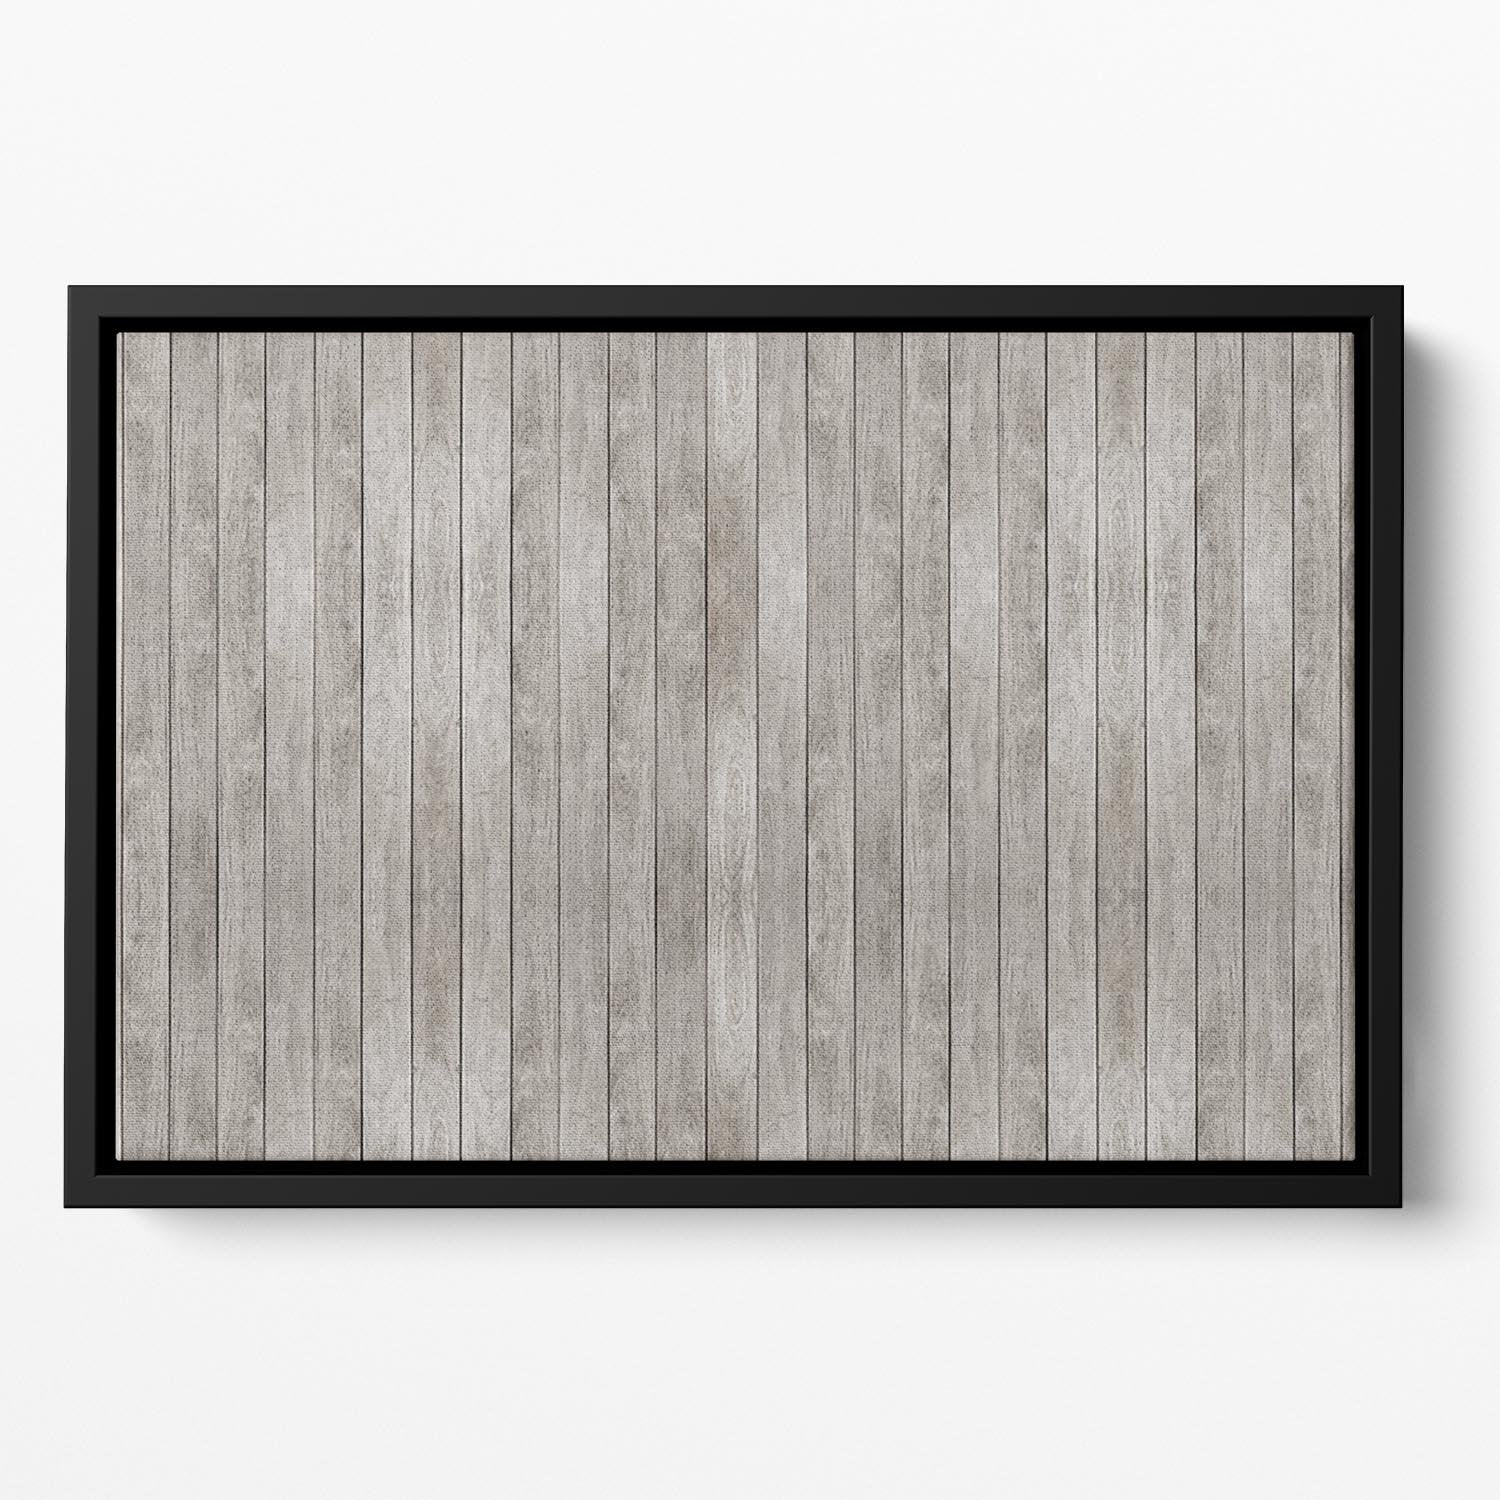 Texture of Old wood floor Floating Framed Canvas - Canvas Art Rocks - 2